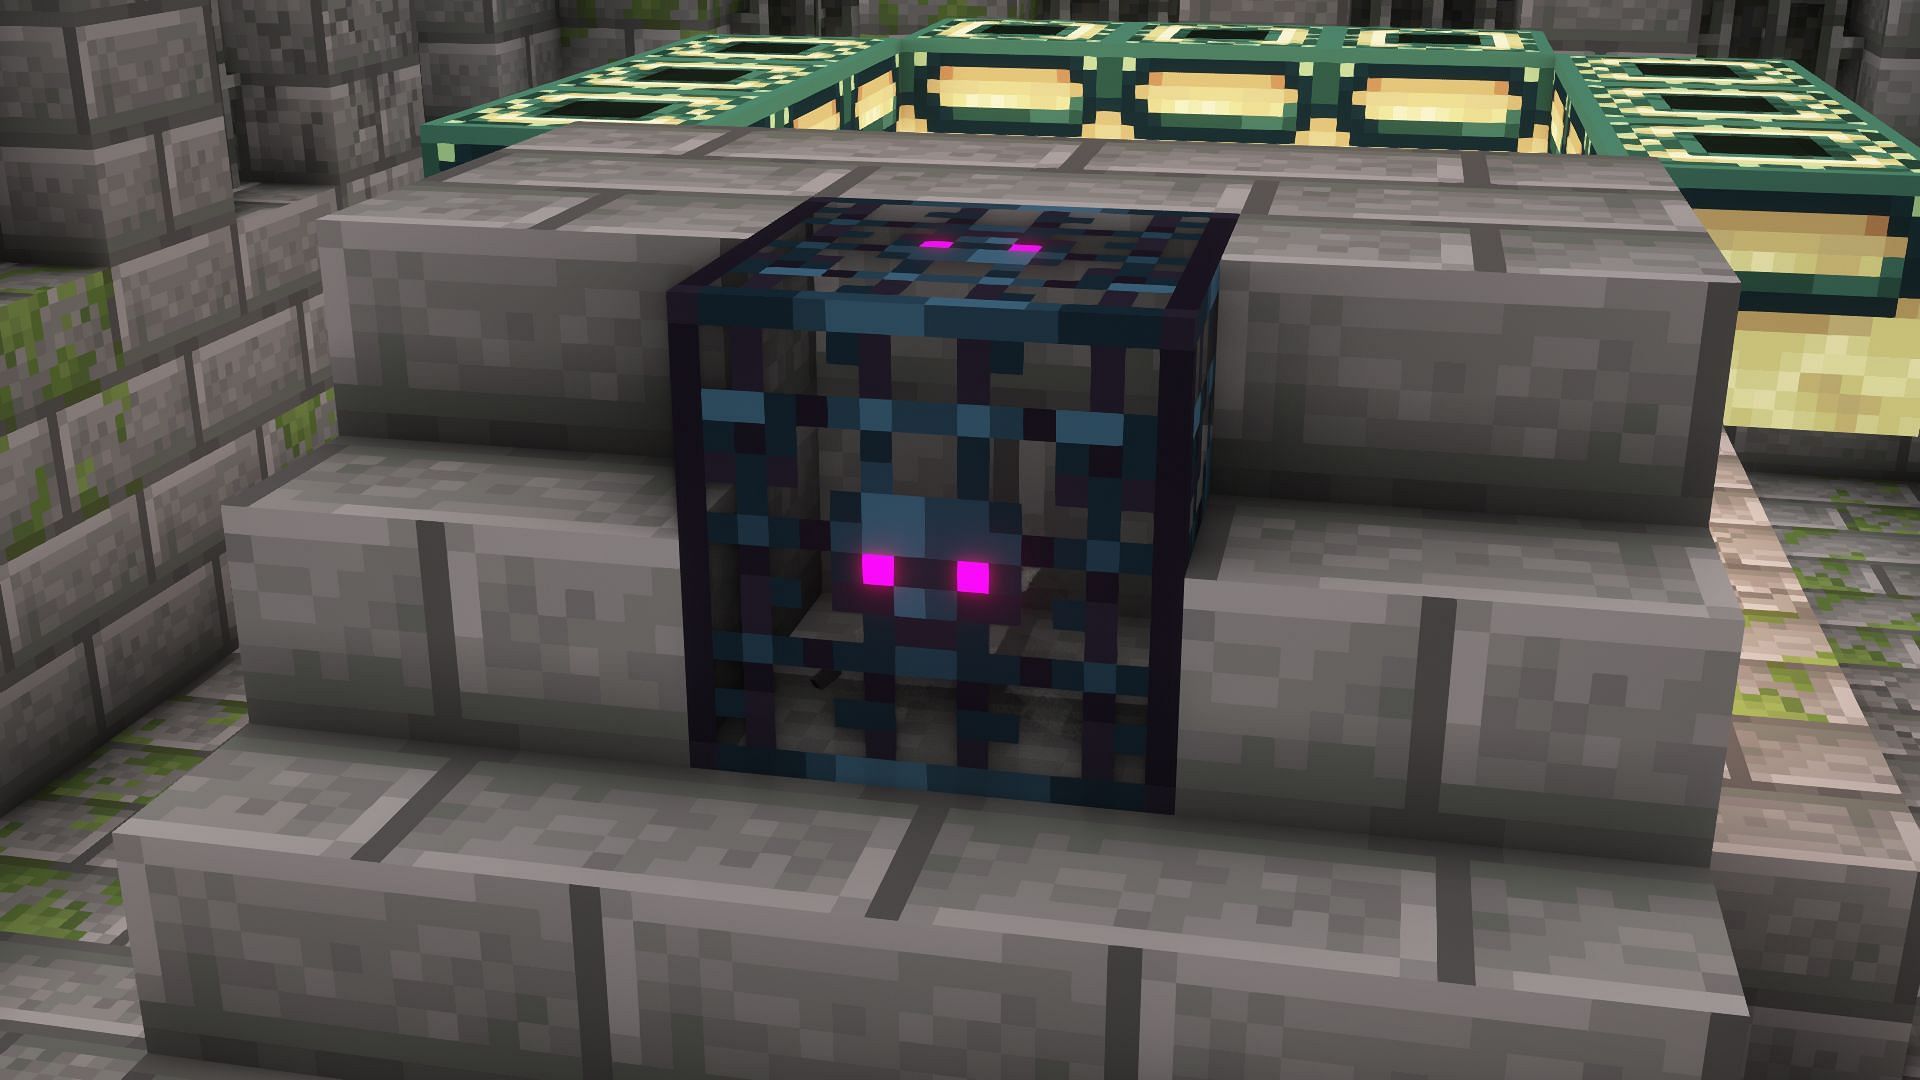 A silverfish spawner in Minecraft (Image via Mojang)